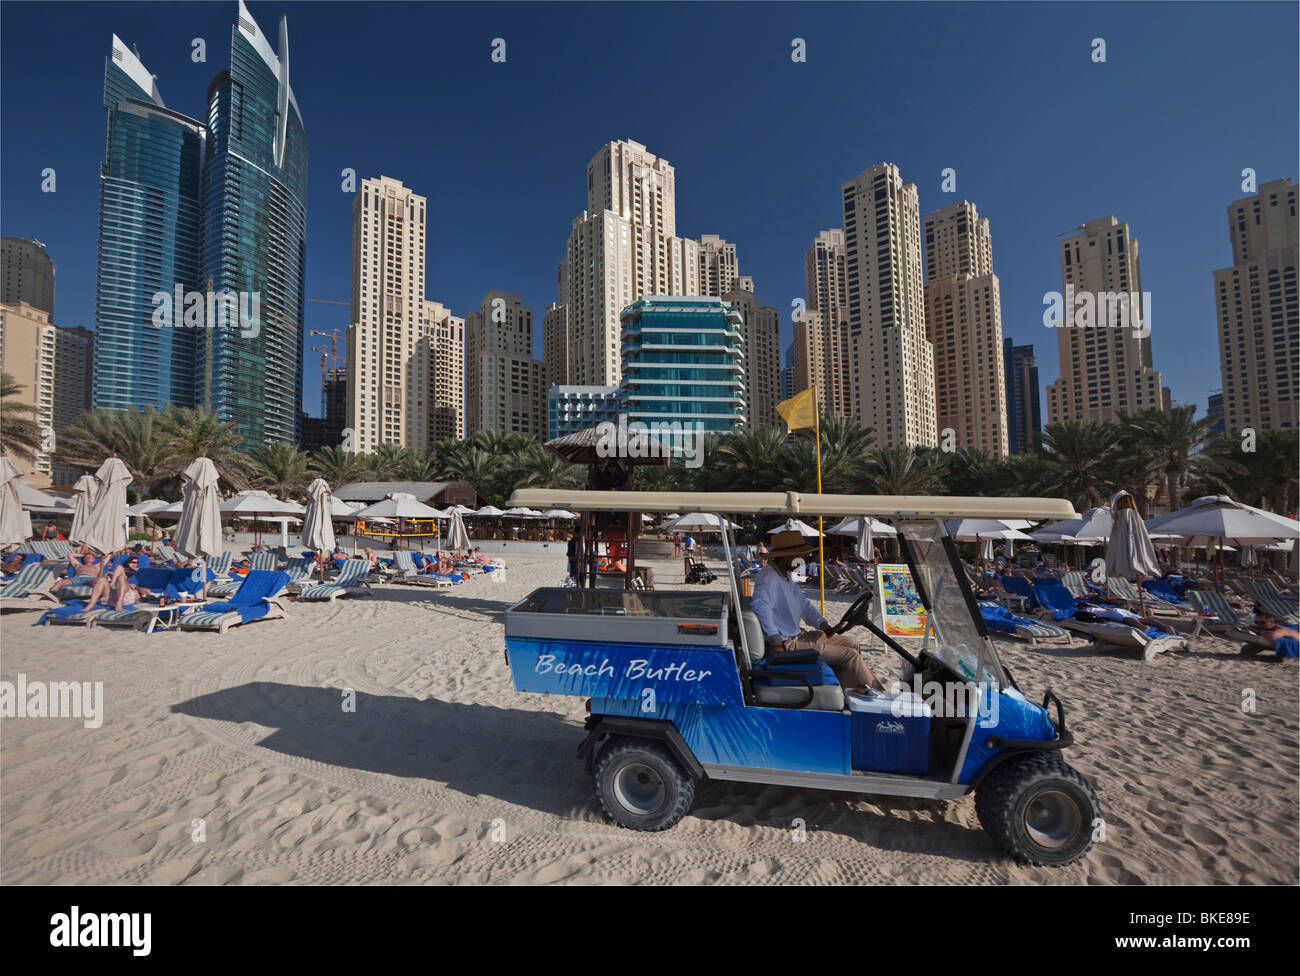 Beach Butler at Hotel Beach of Hilton in Dubai , United Arab Emirates Stock Photo